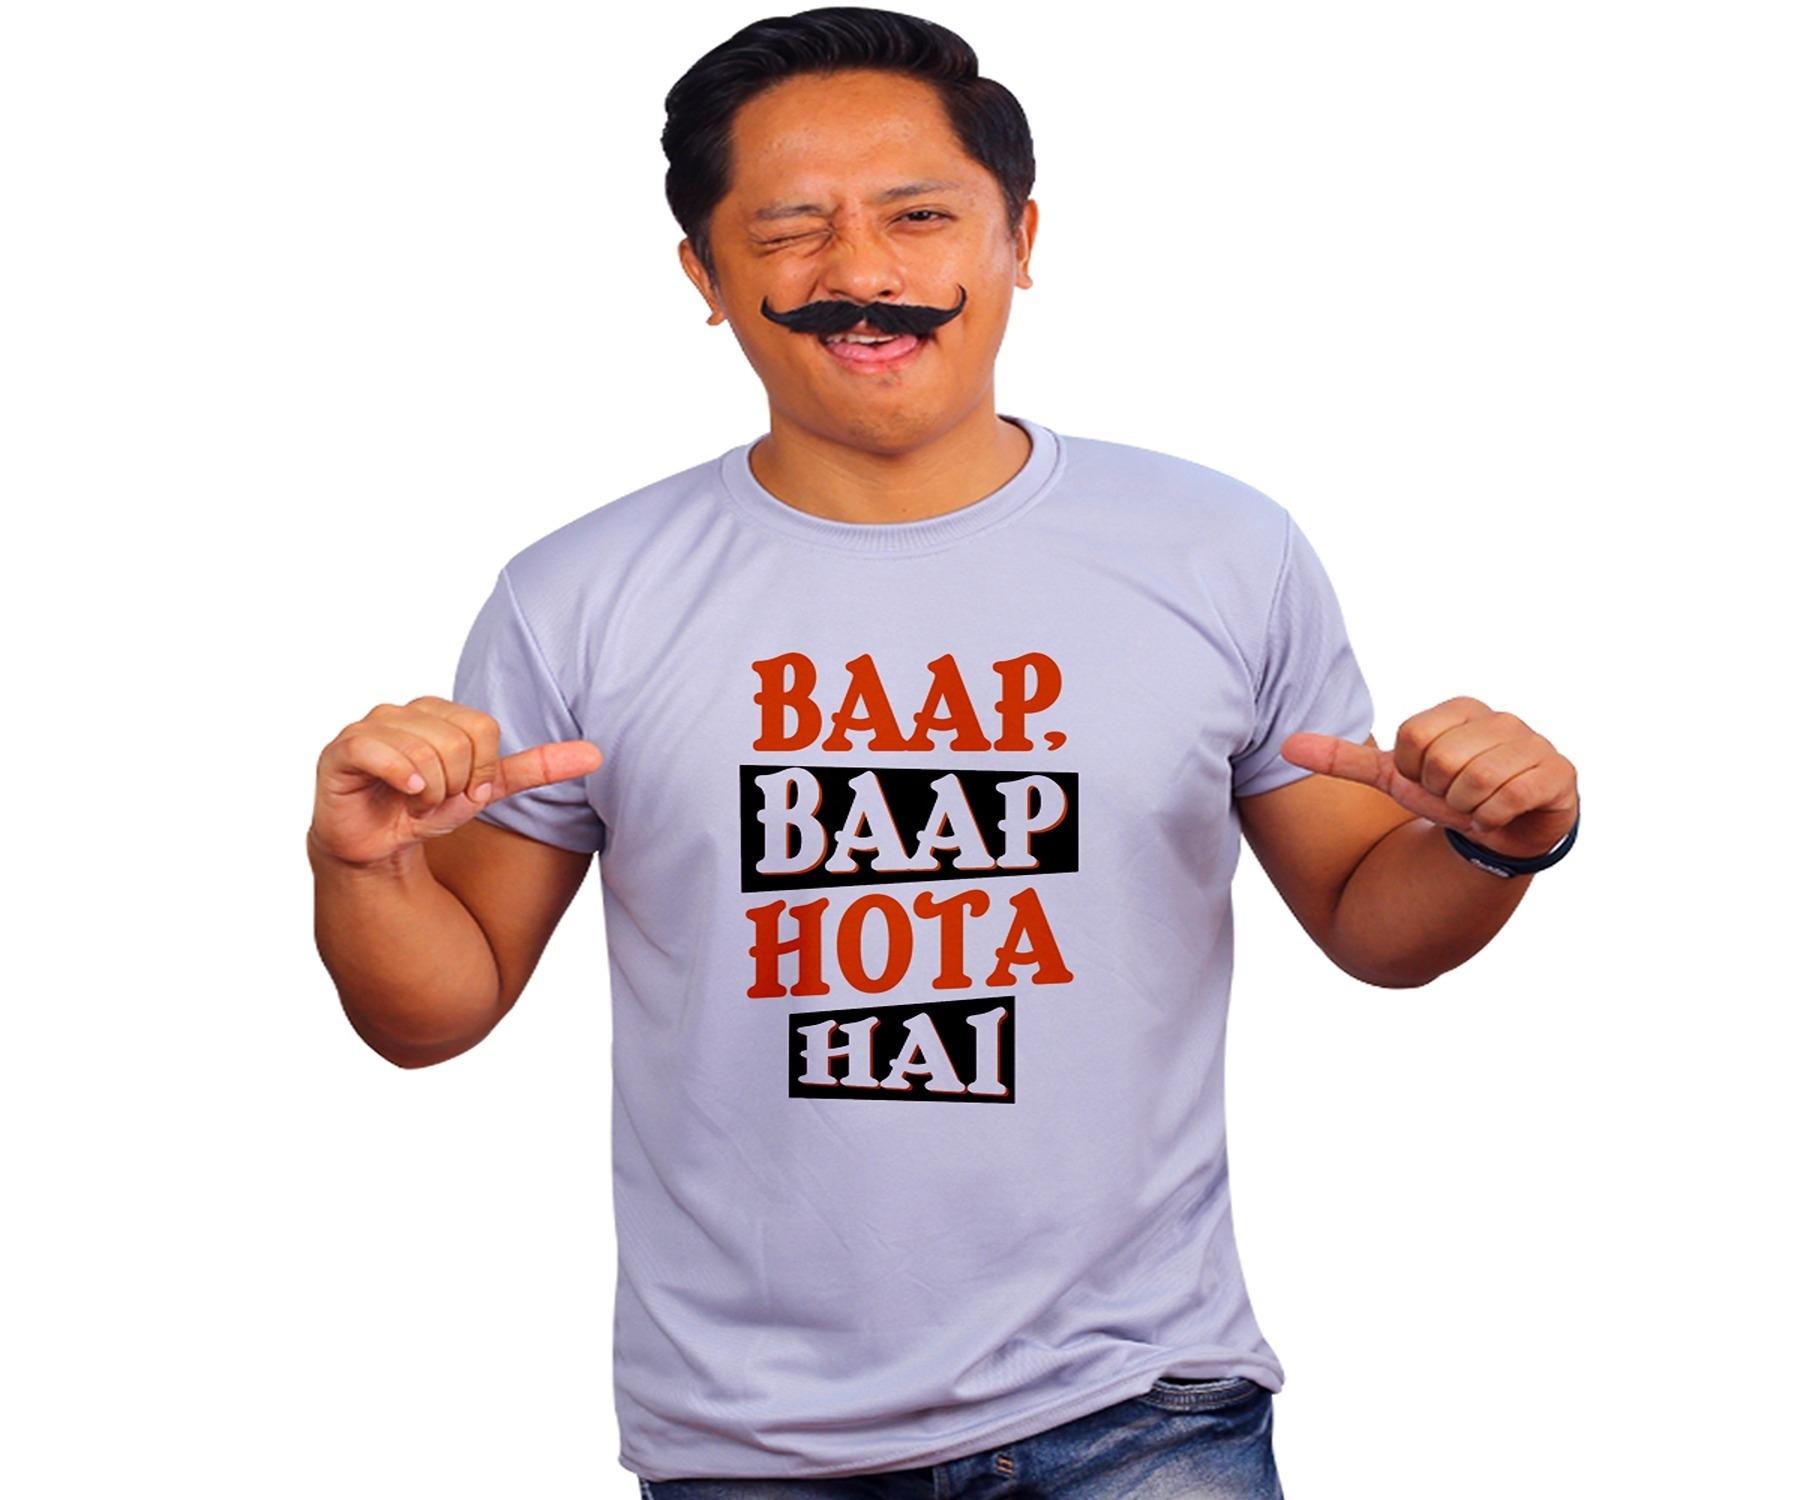 Mooch Wale Baap Baap Hota Hai Grey Quick-Dri T-shirt For Men - Grey, S -  JioMart